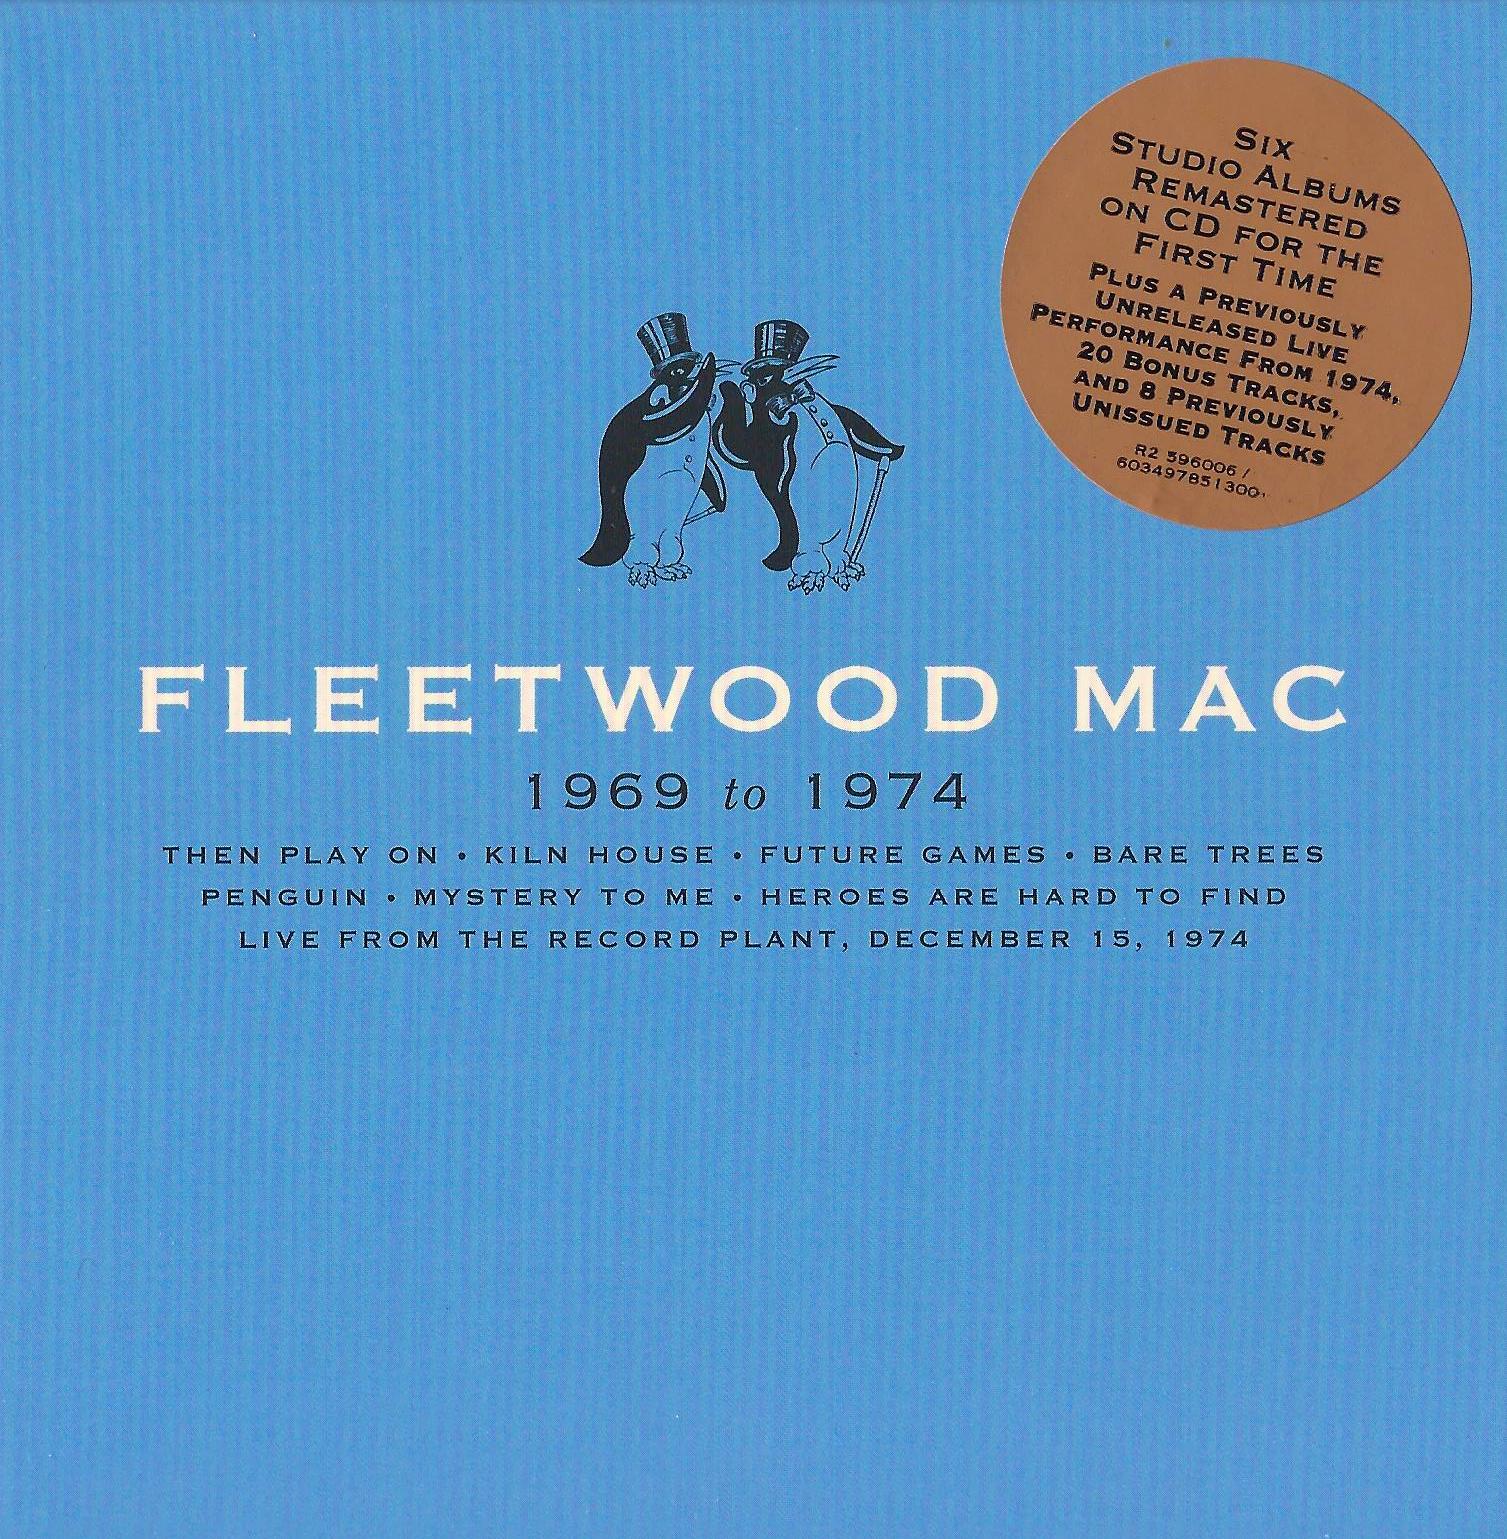 FLEETWOOD MAC - 1969 to 1974